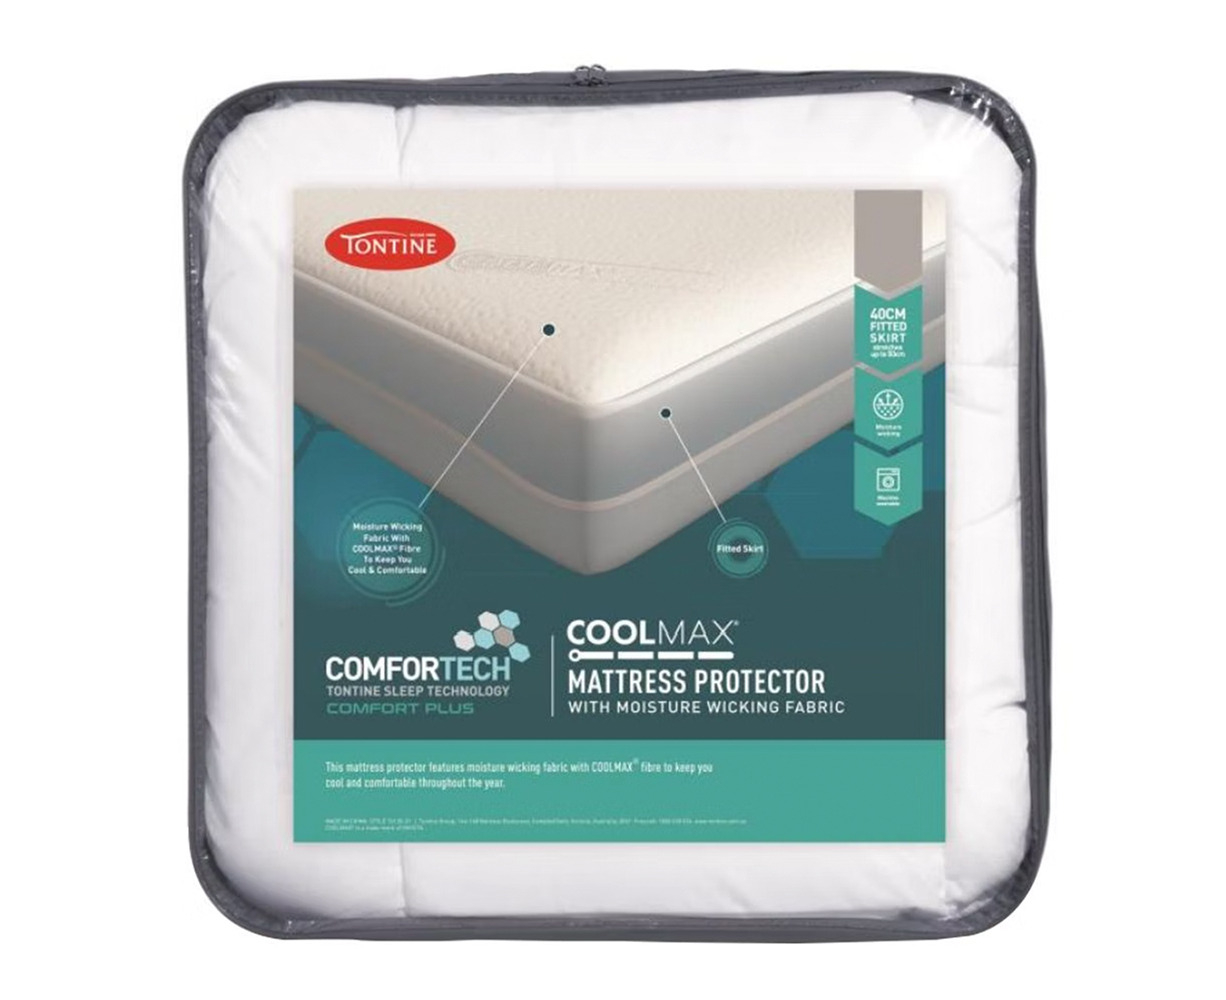 tontine comfortech mattress protector review